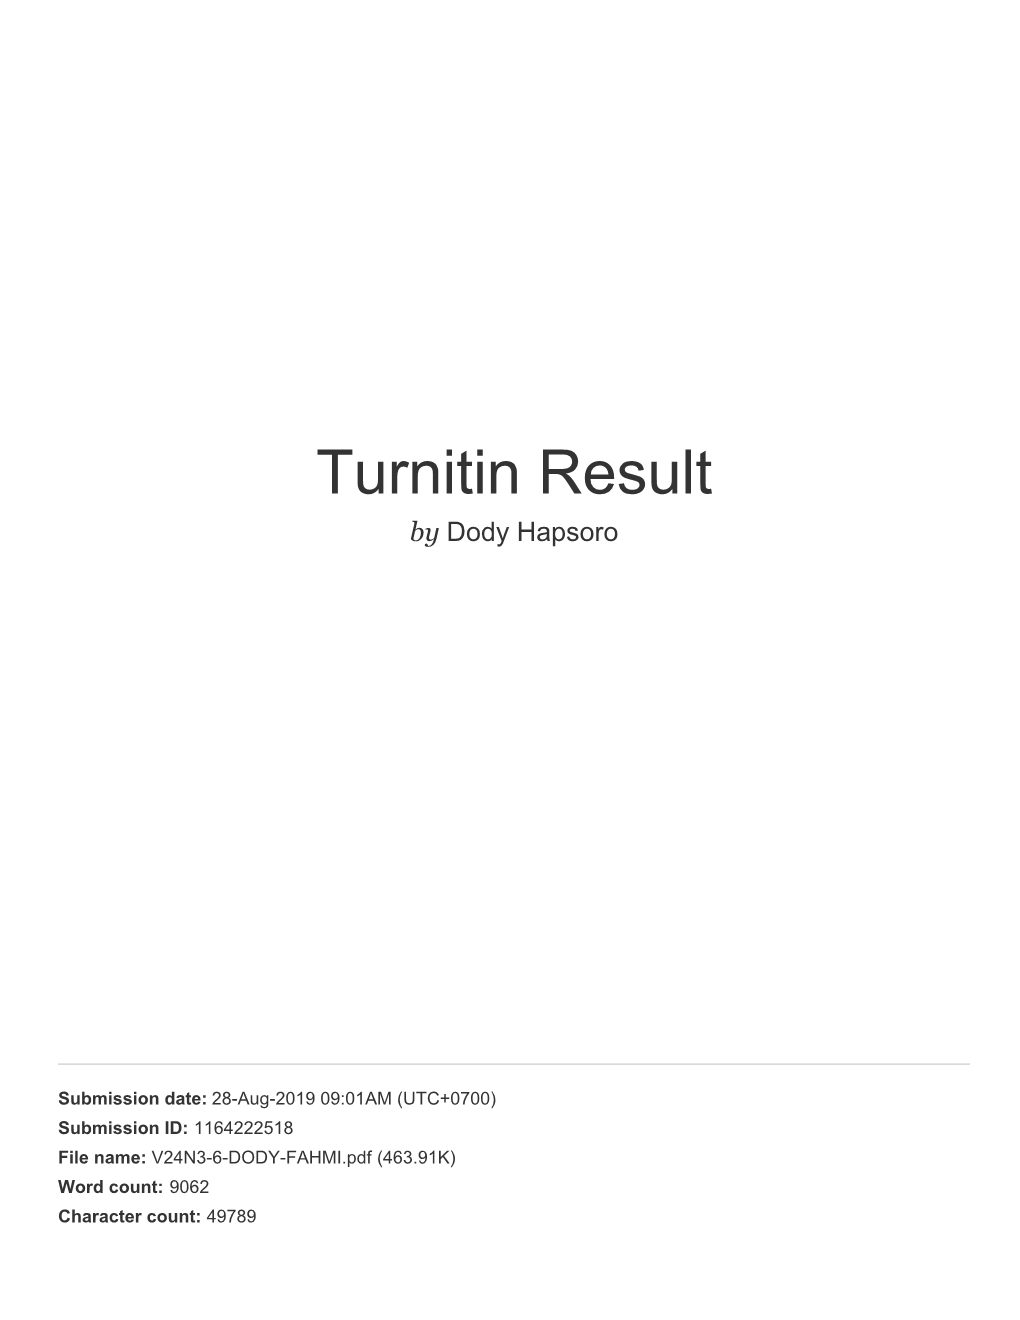 Turnitin Result by Dody Hapsoro